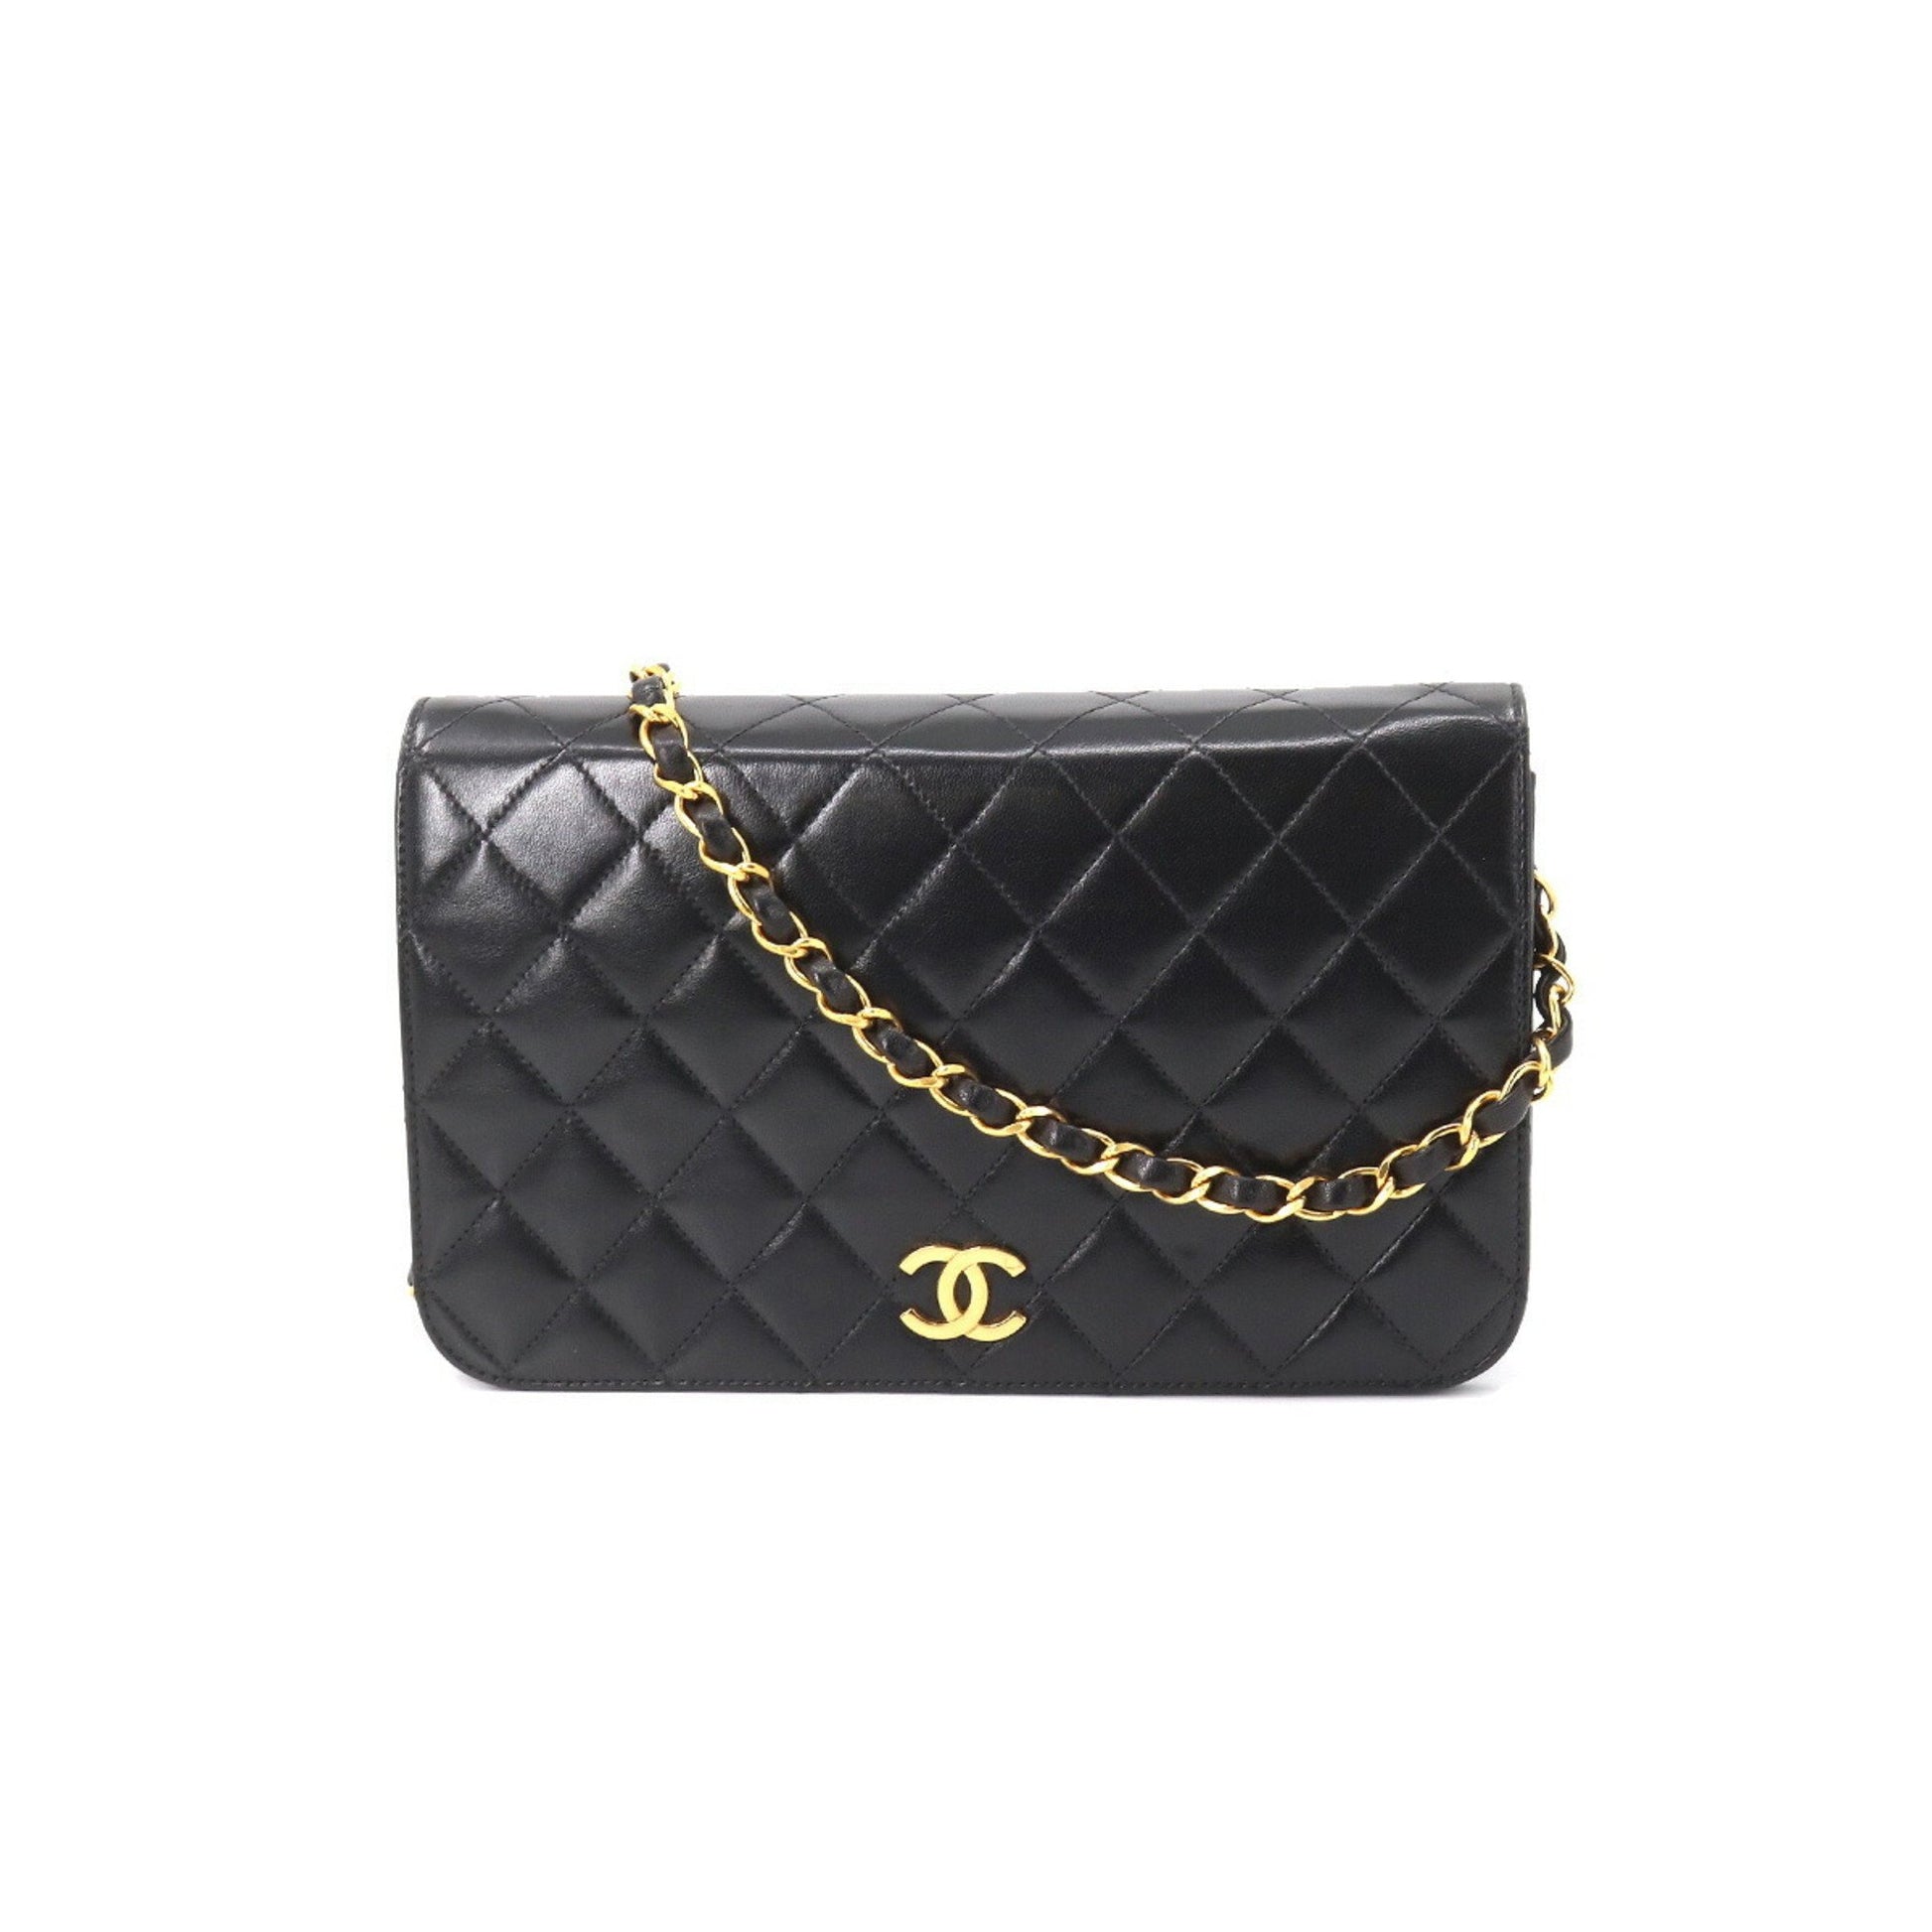 Chanel matelasse chain shoulder bag leather black gold metal fittings